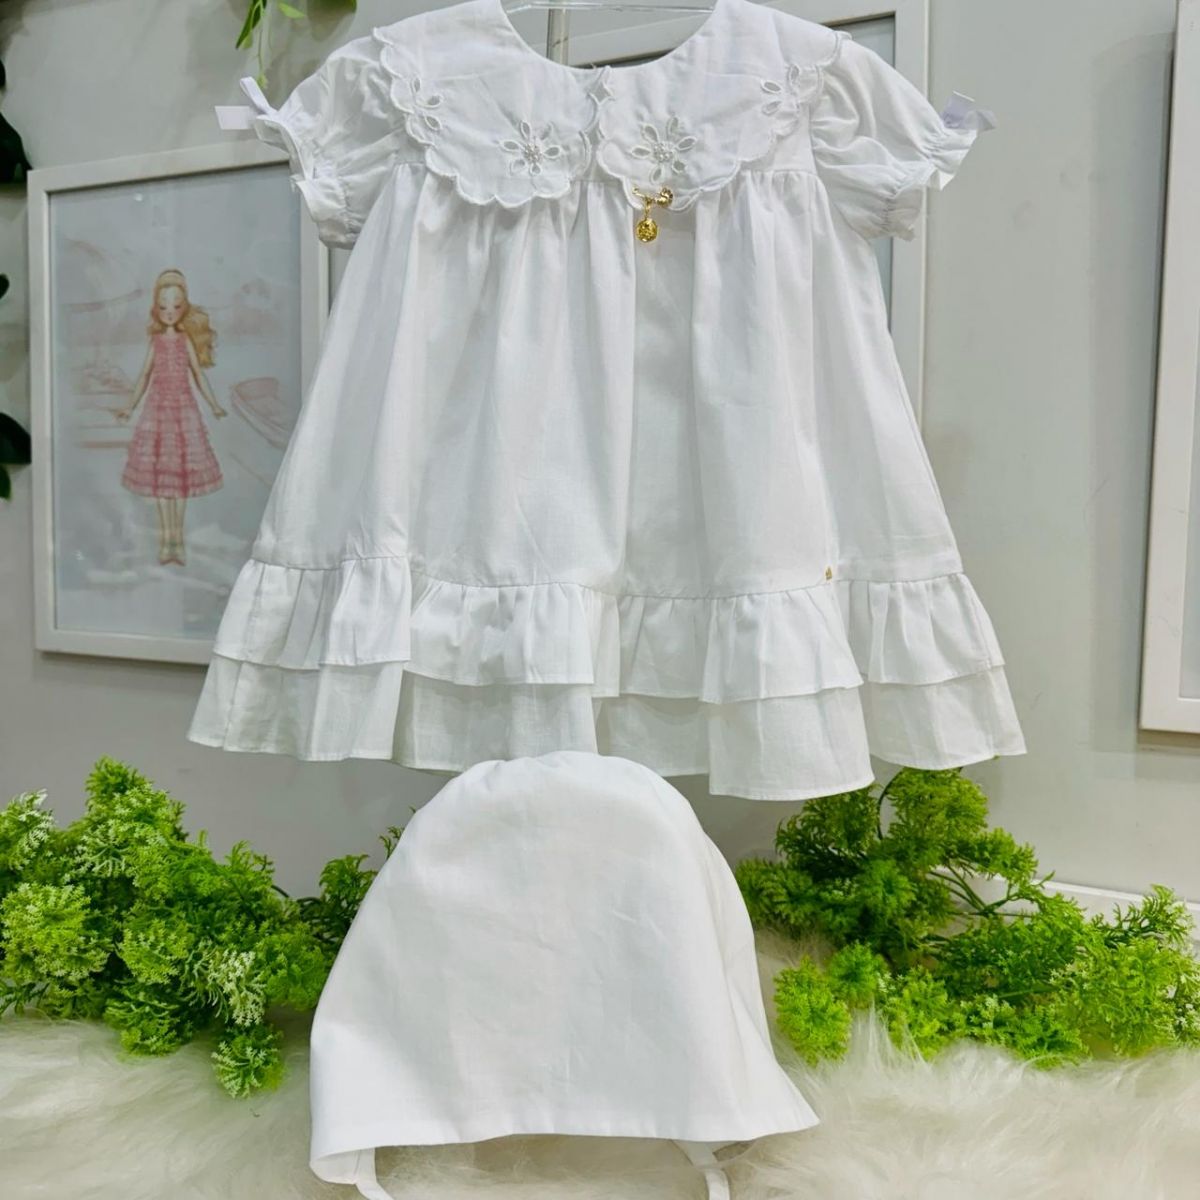 Vestido Infantil Roana Branco Gola Laise Bordado Mini Pérolas Broche Strass e Touca